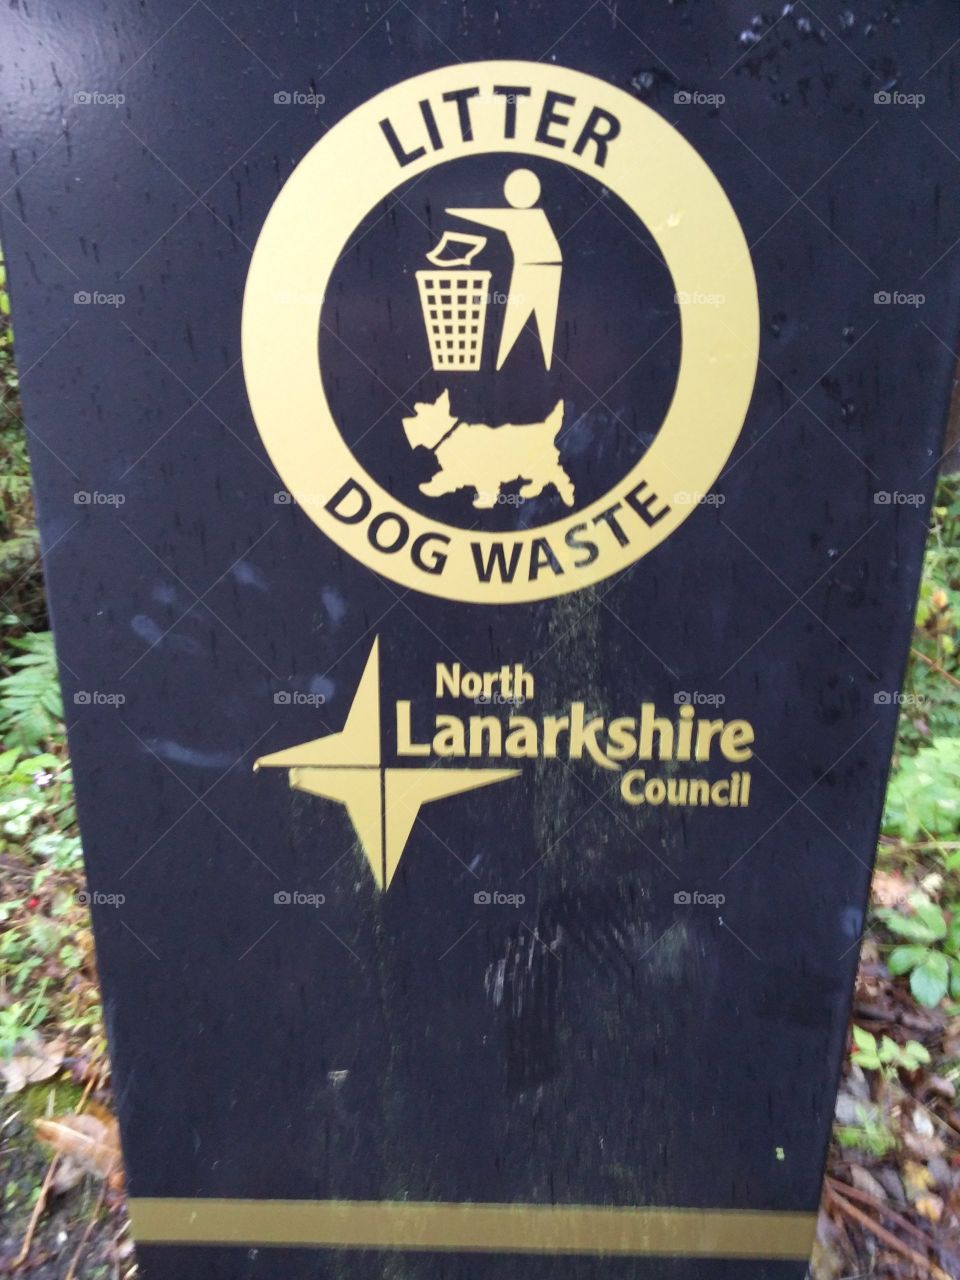 Dog litter bin in North Lanarkshire in Scotland